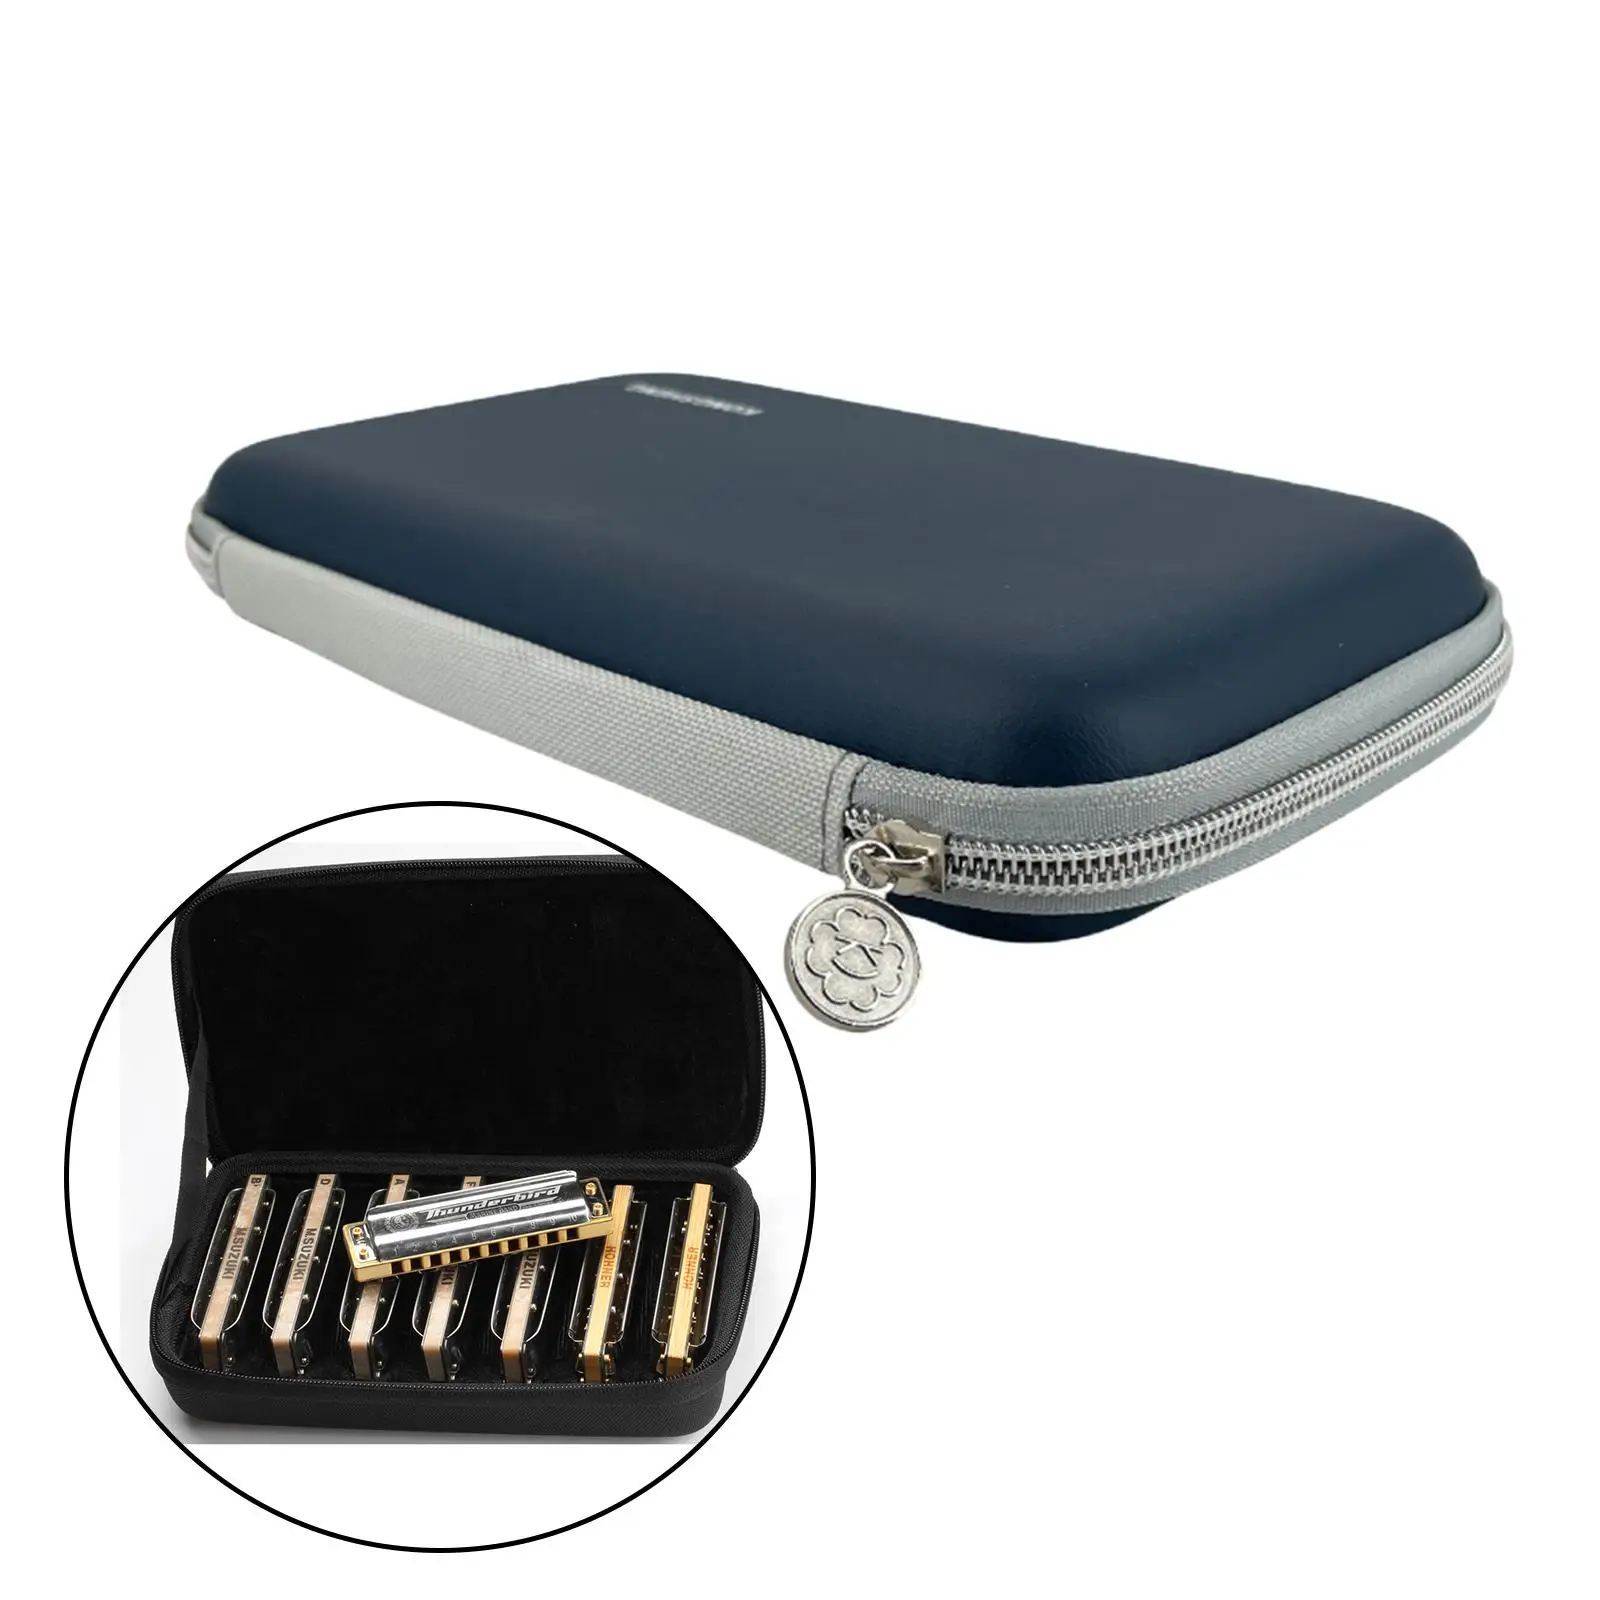 Tooyful Portable EVA 10 Holes Harmonica Storage Case Bag Mouth Organ Box Container Black - Hold 7pcs Harmonicas